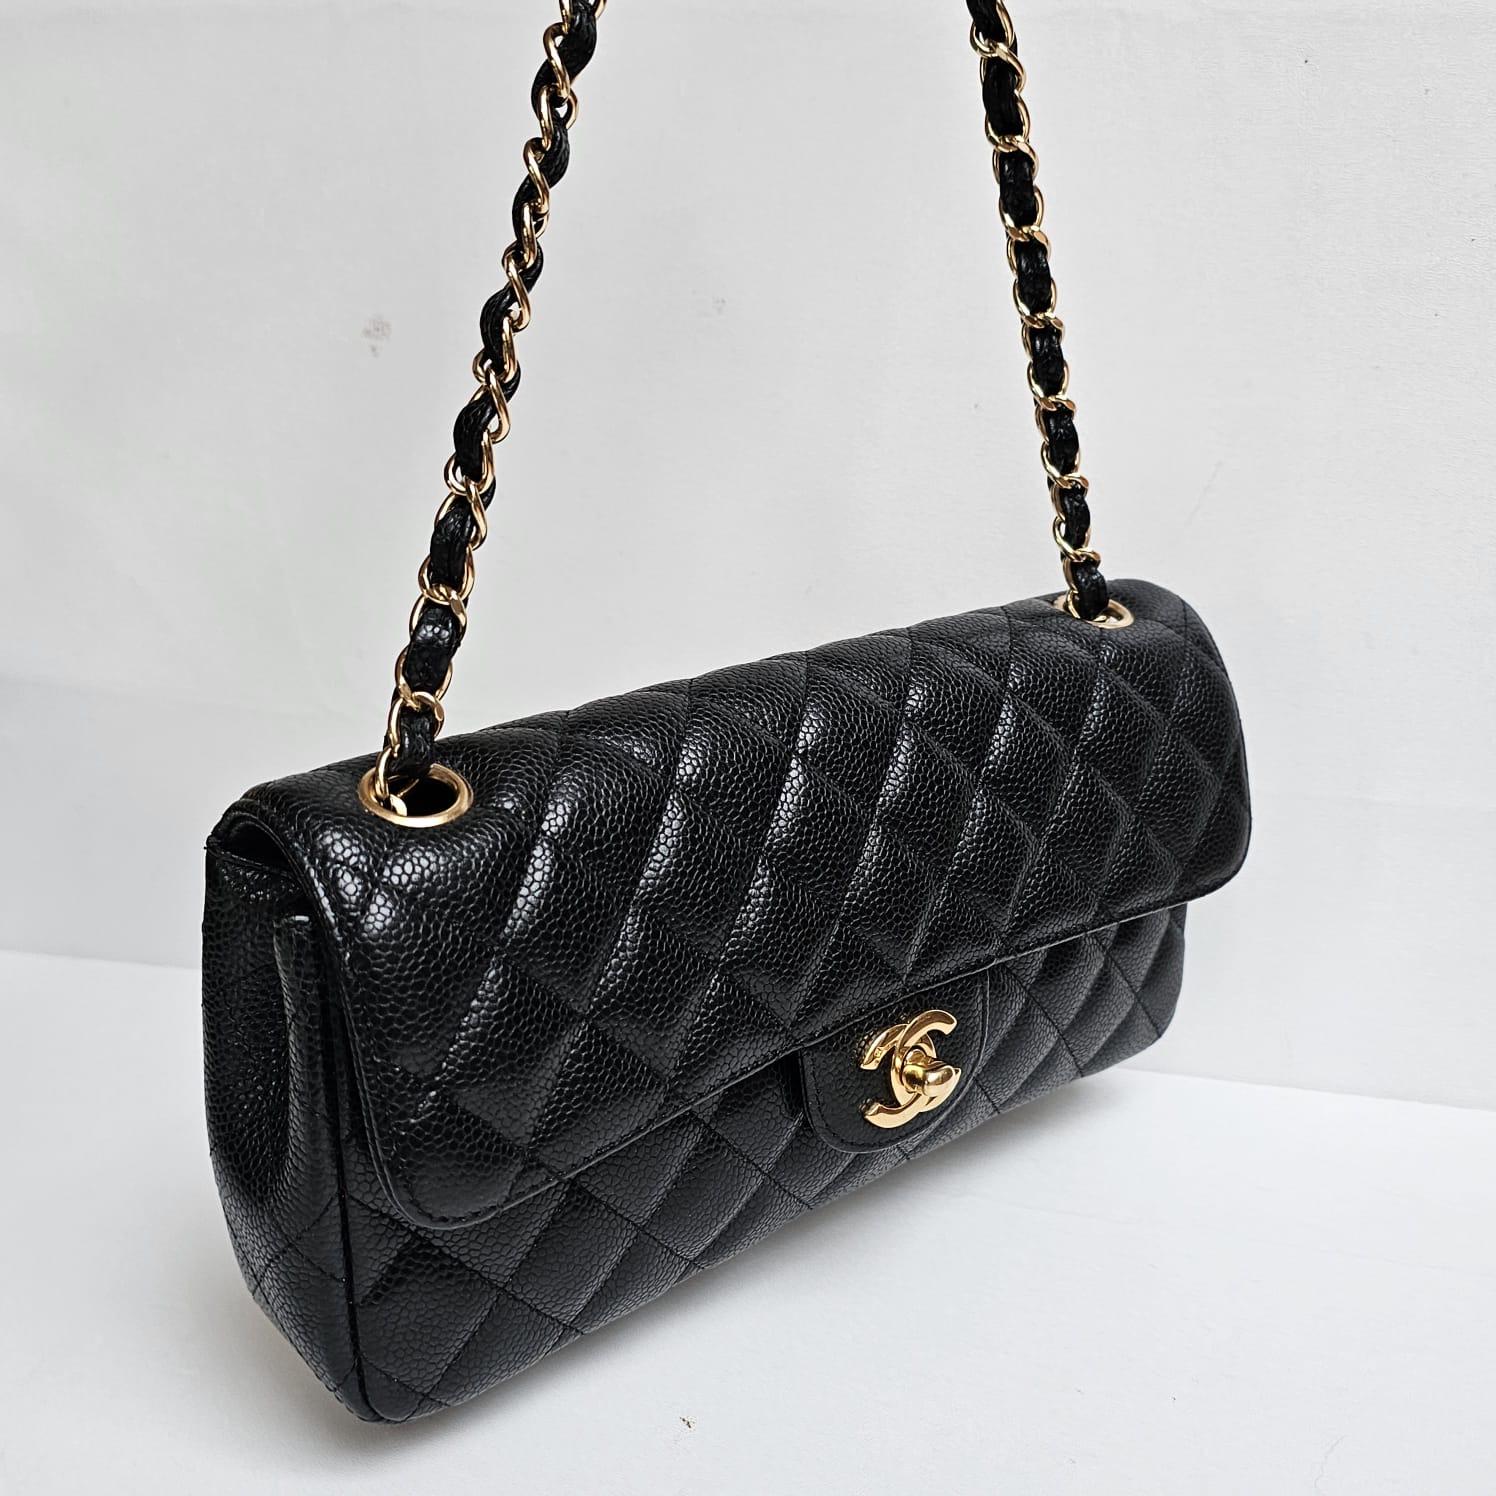 Chanel Black Caviar Quilted East West Flap Shoulder Bag For Sale 6